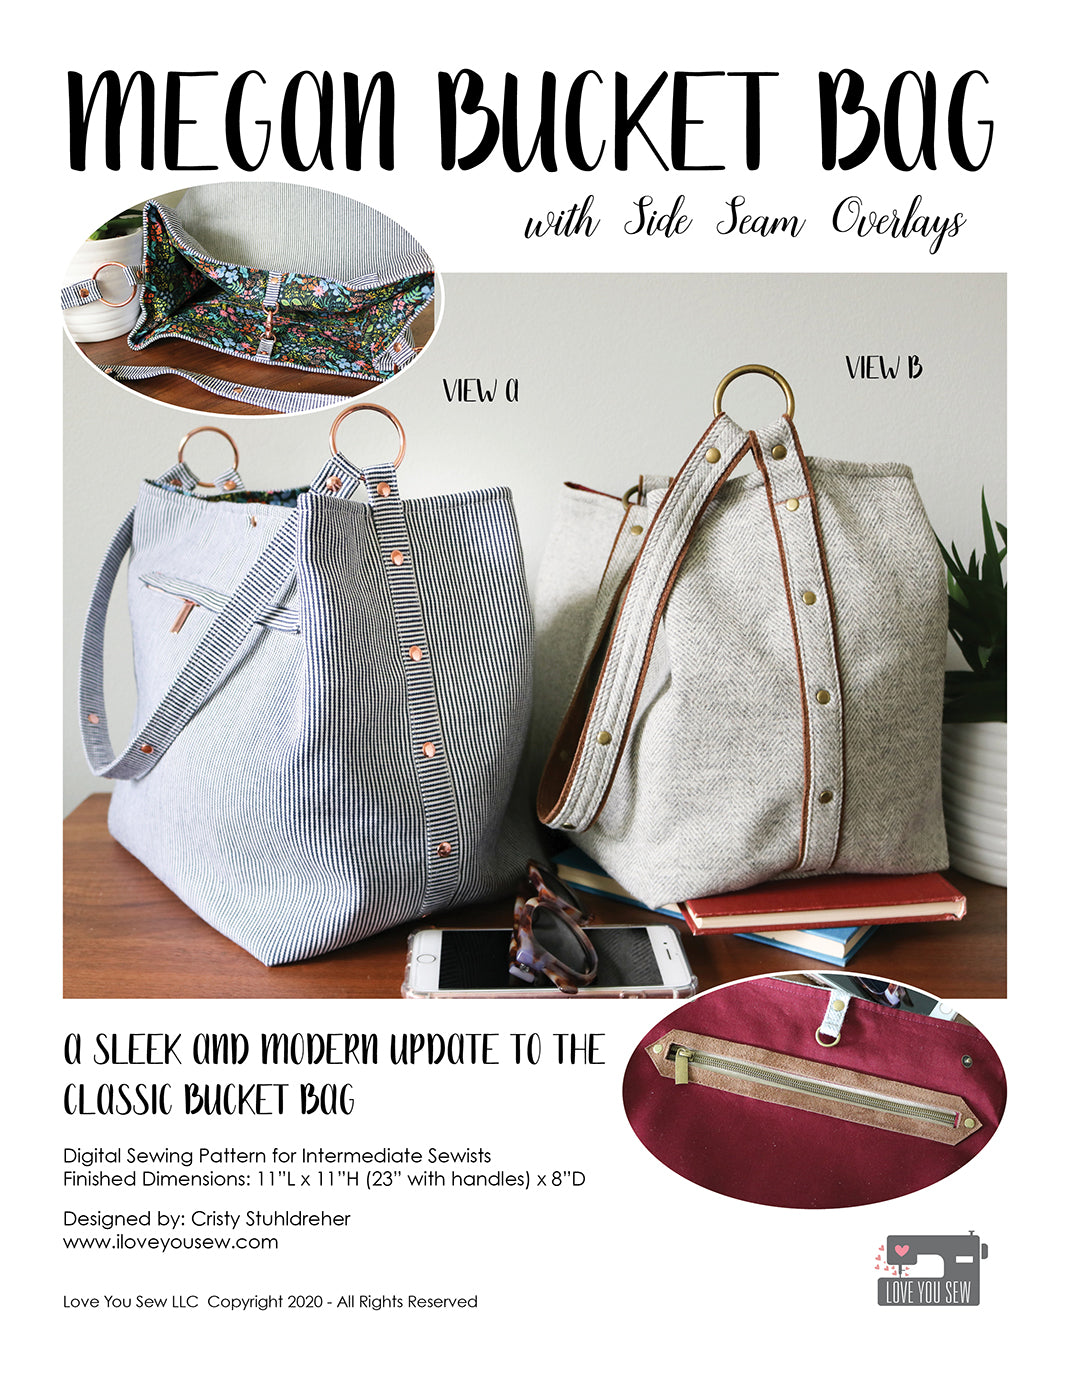 Megan Bucket Bag Digital Sewing Pattern